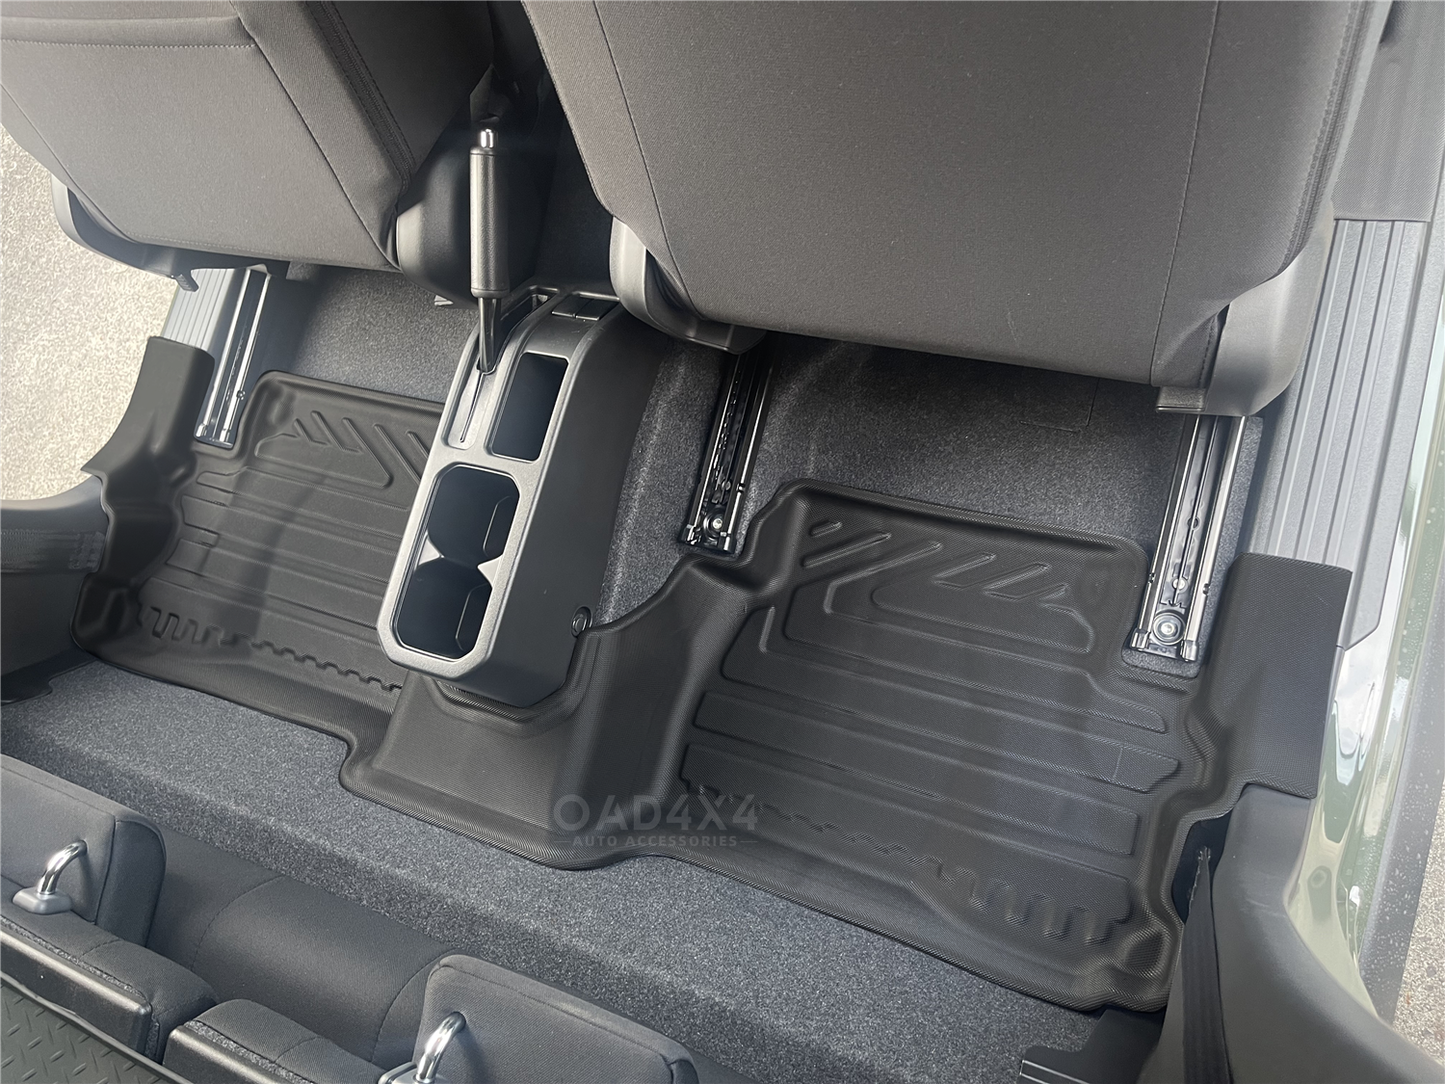 5D TPE Floor Mats for Suzuki Jimny 3 Doors Manual Transmission 2018-Onwards Door Sill Covered Car Mats Liner